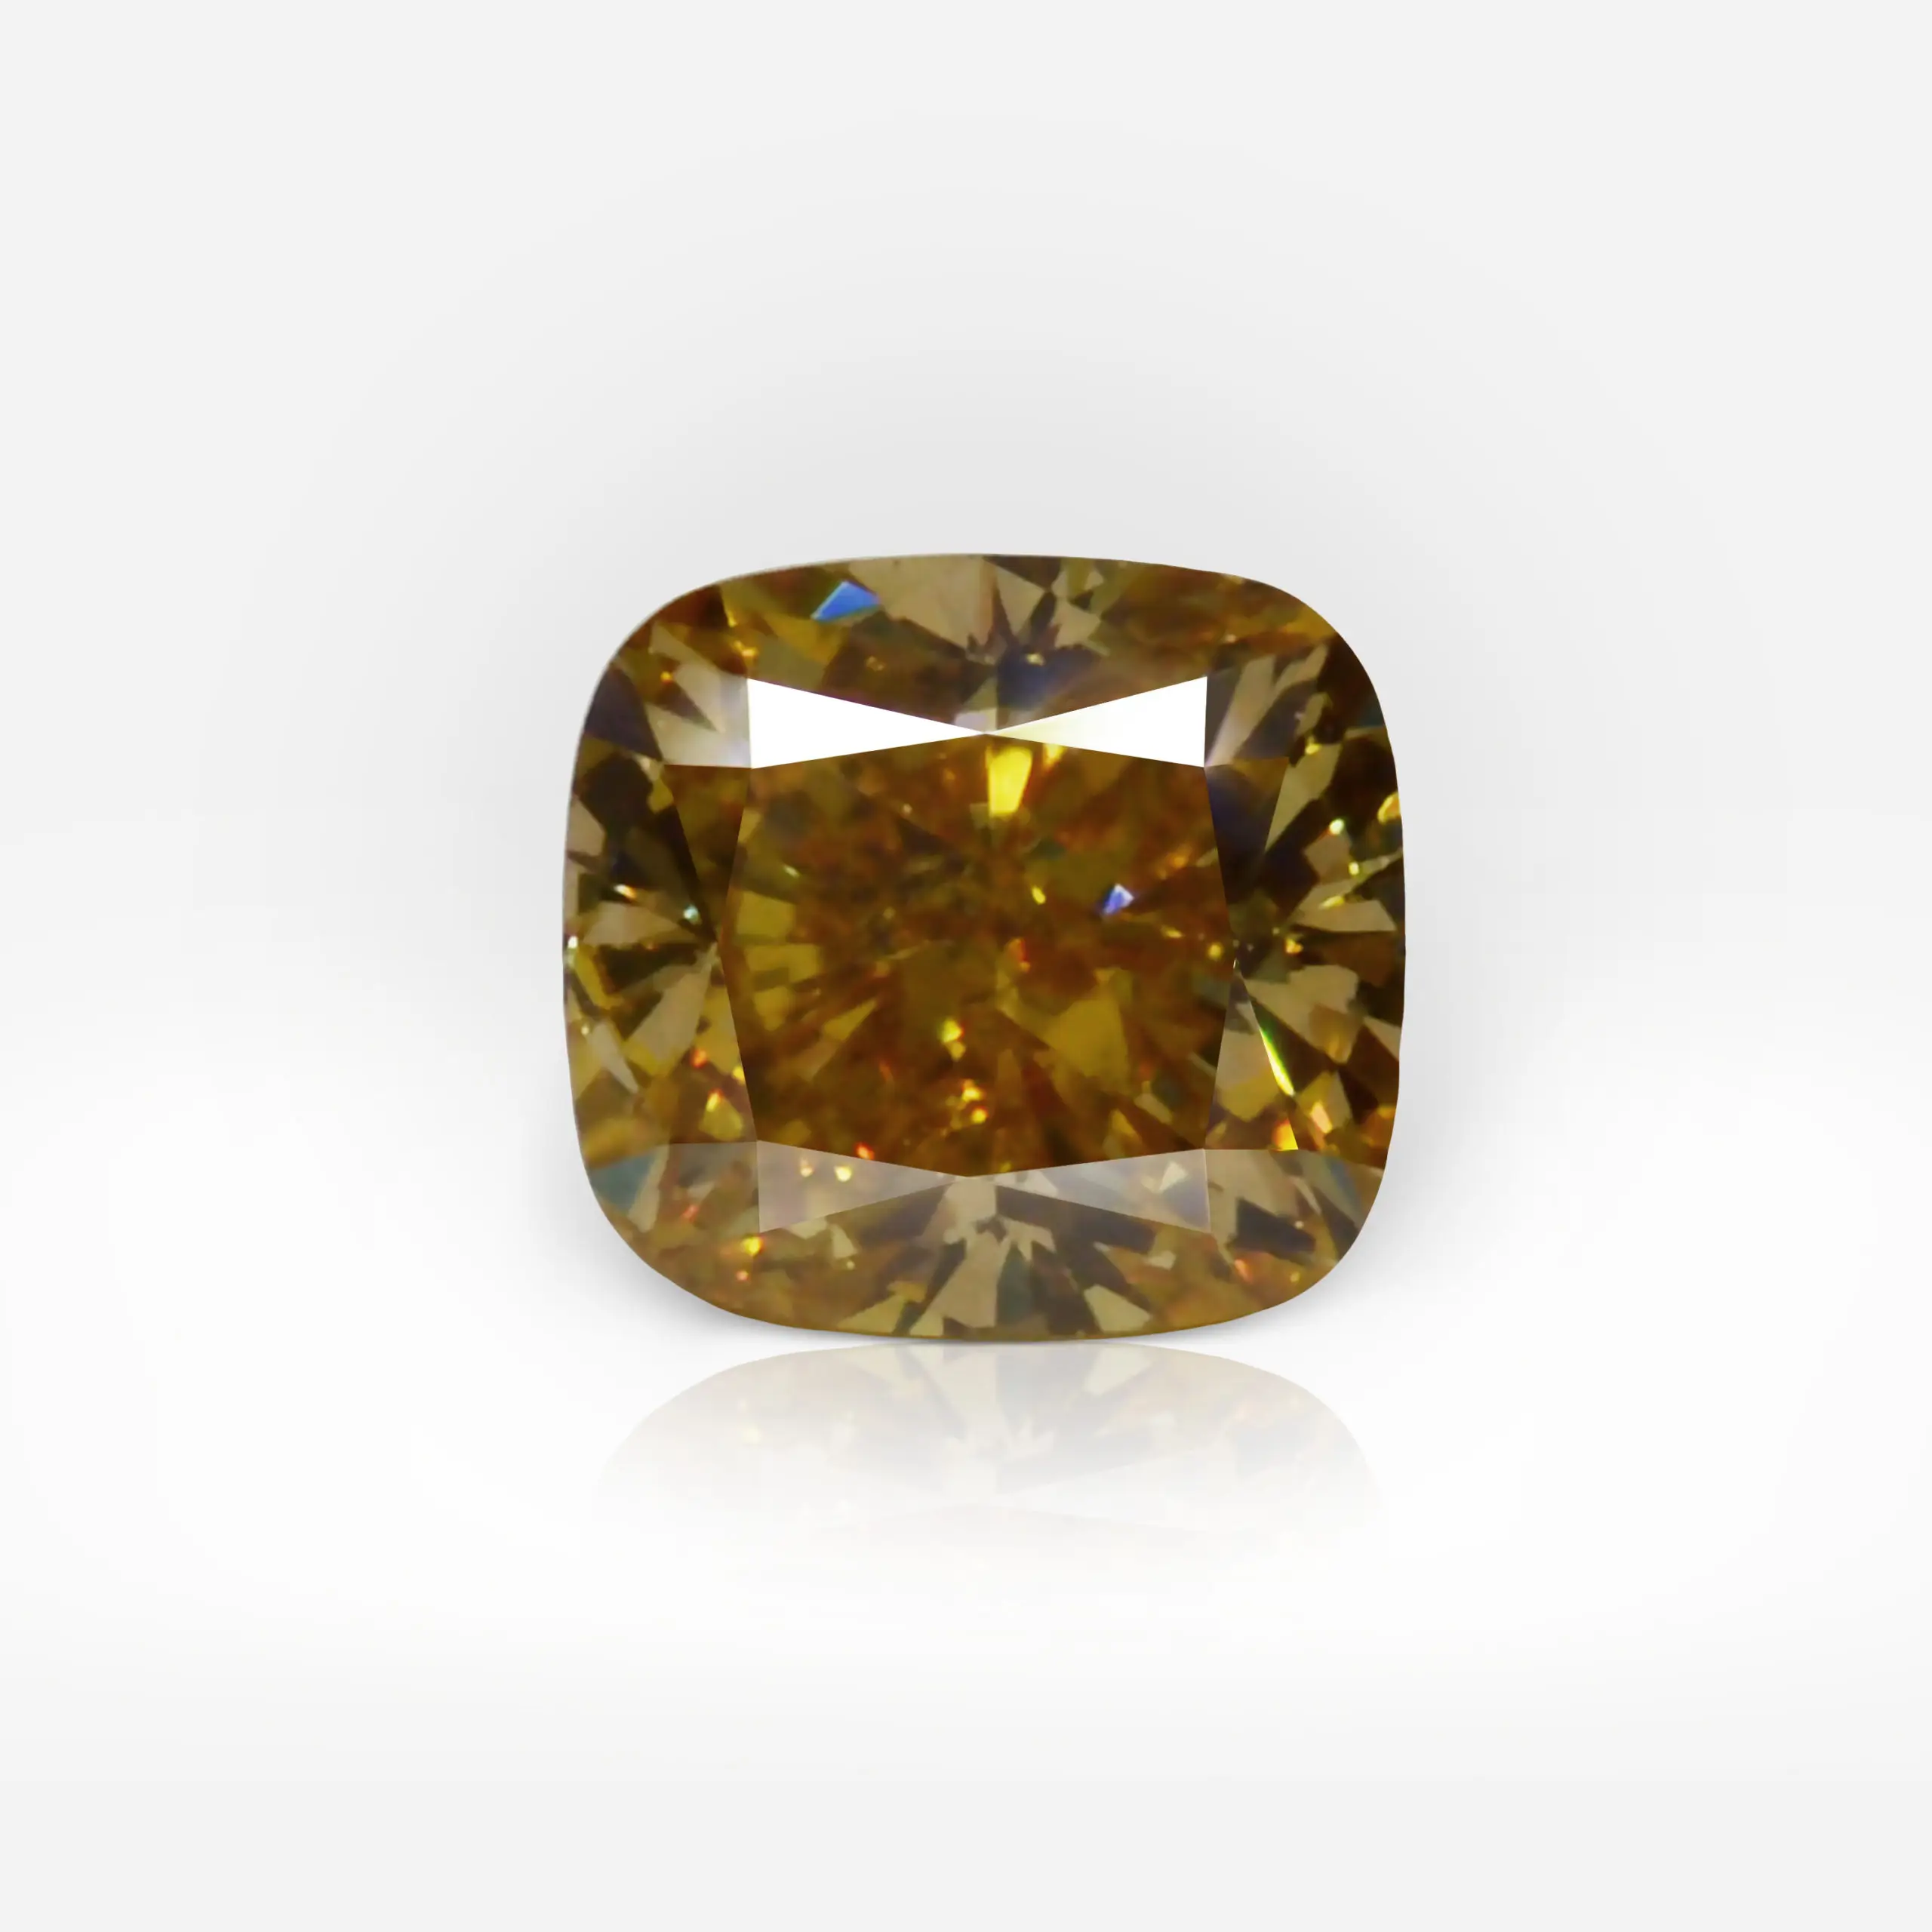 0.27 carat Fancy Deep Orange Yellow SI2 Cushion Diamond GIA - picture 1